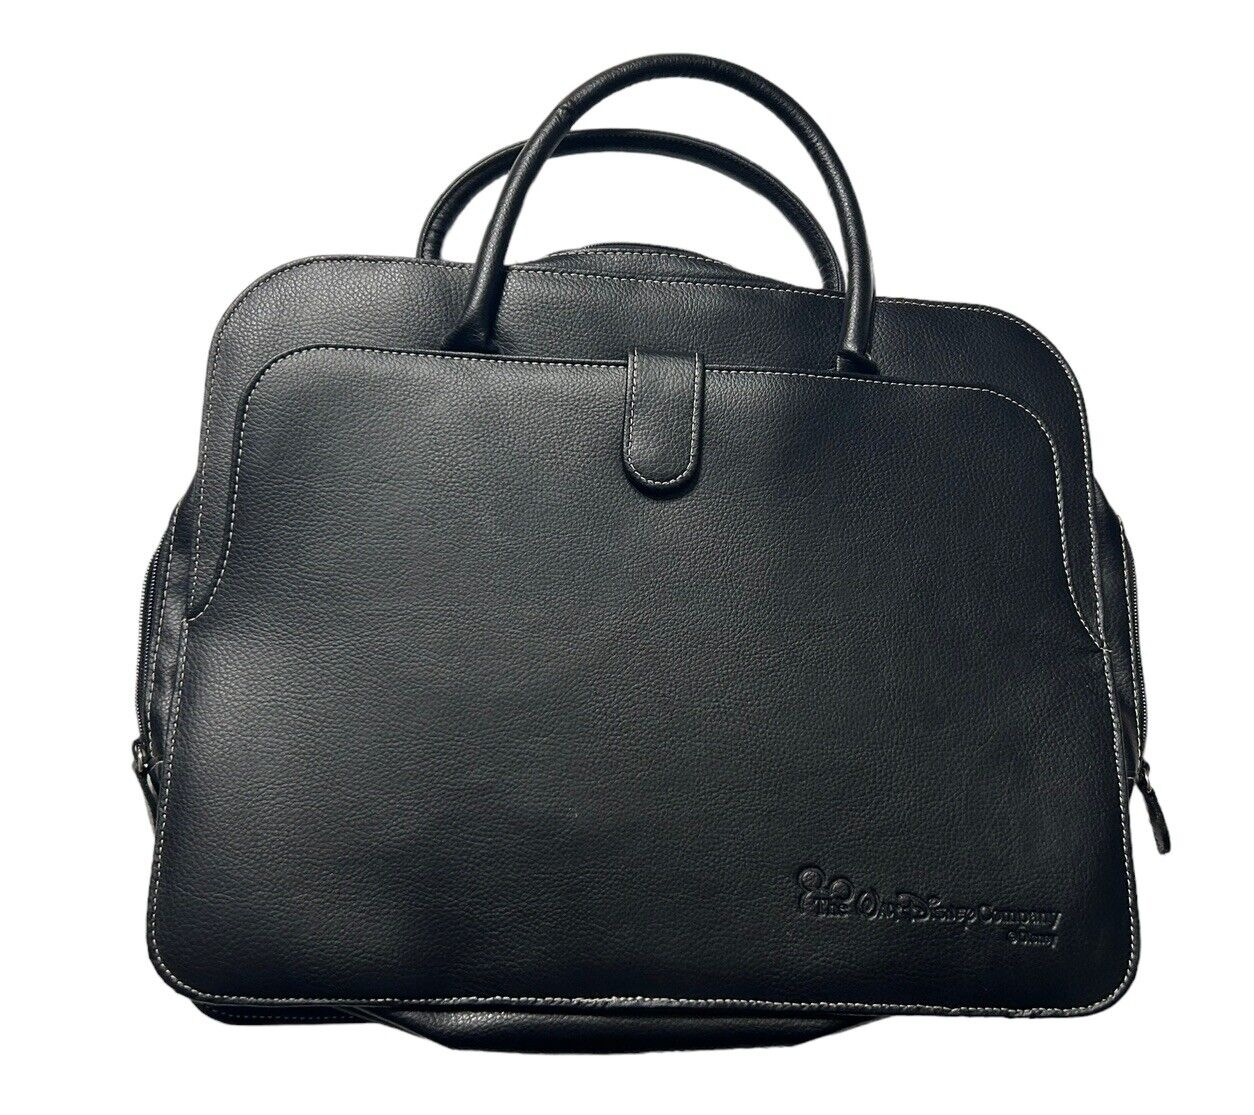 RARE Walt Disney Company Black Work Bag Briefcase Black Pebble Leather